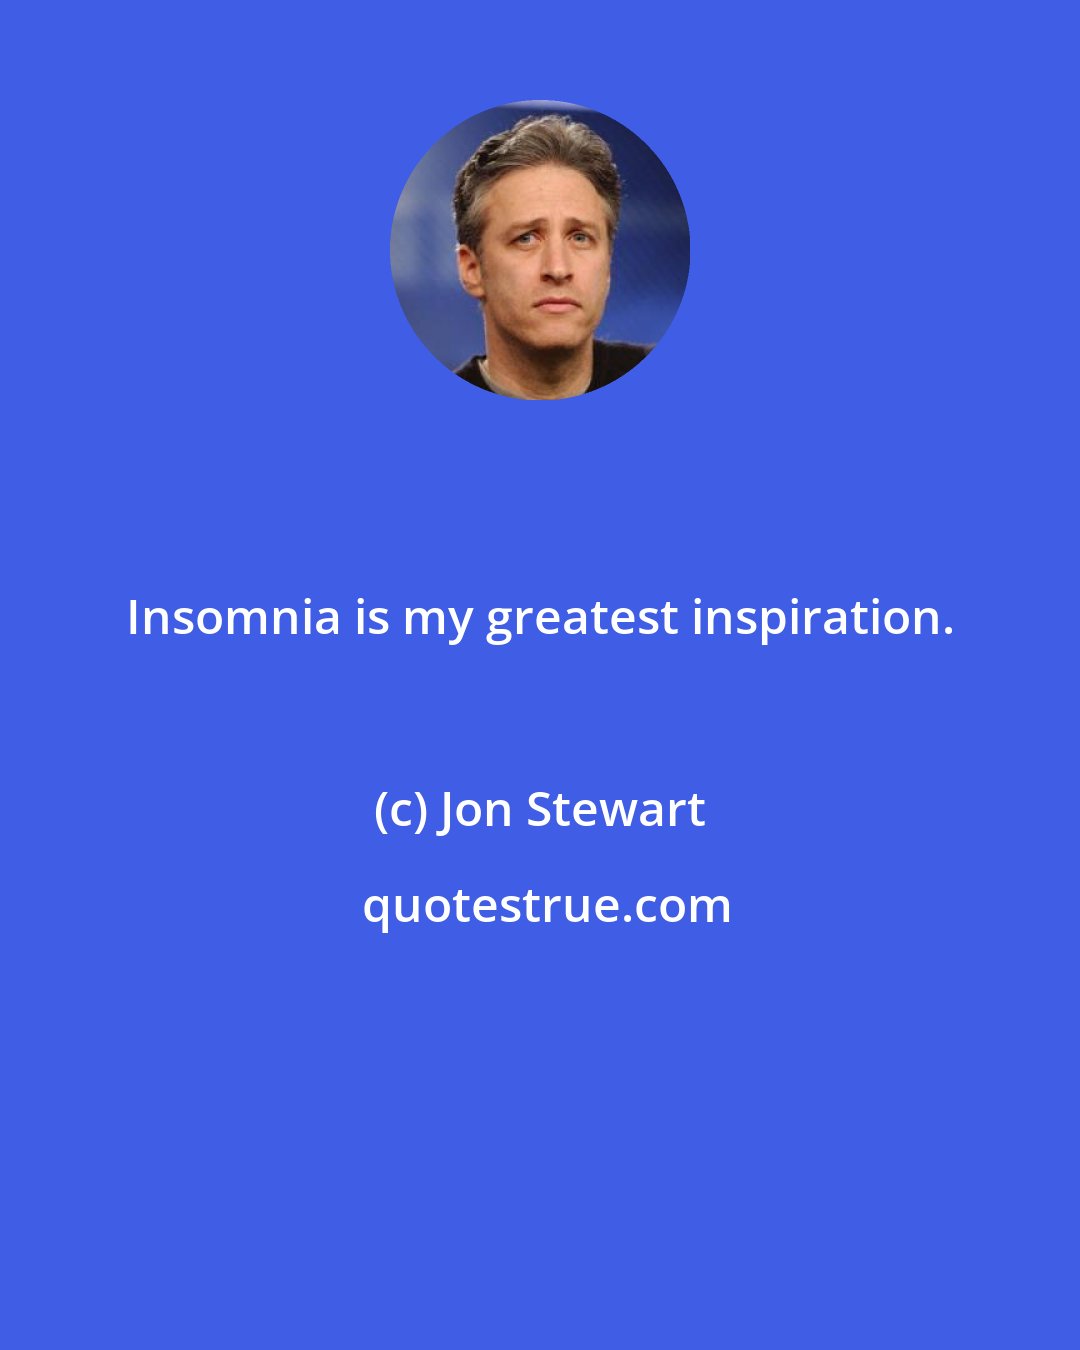 Jon Stewart: Insomnia is my greatest inspiration.